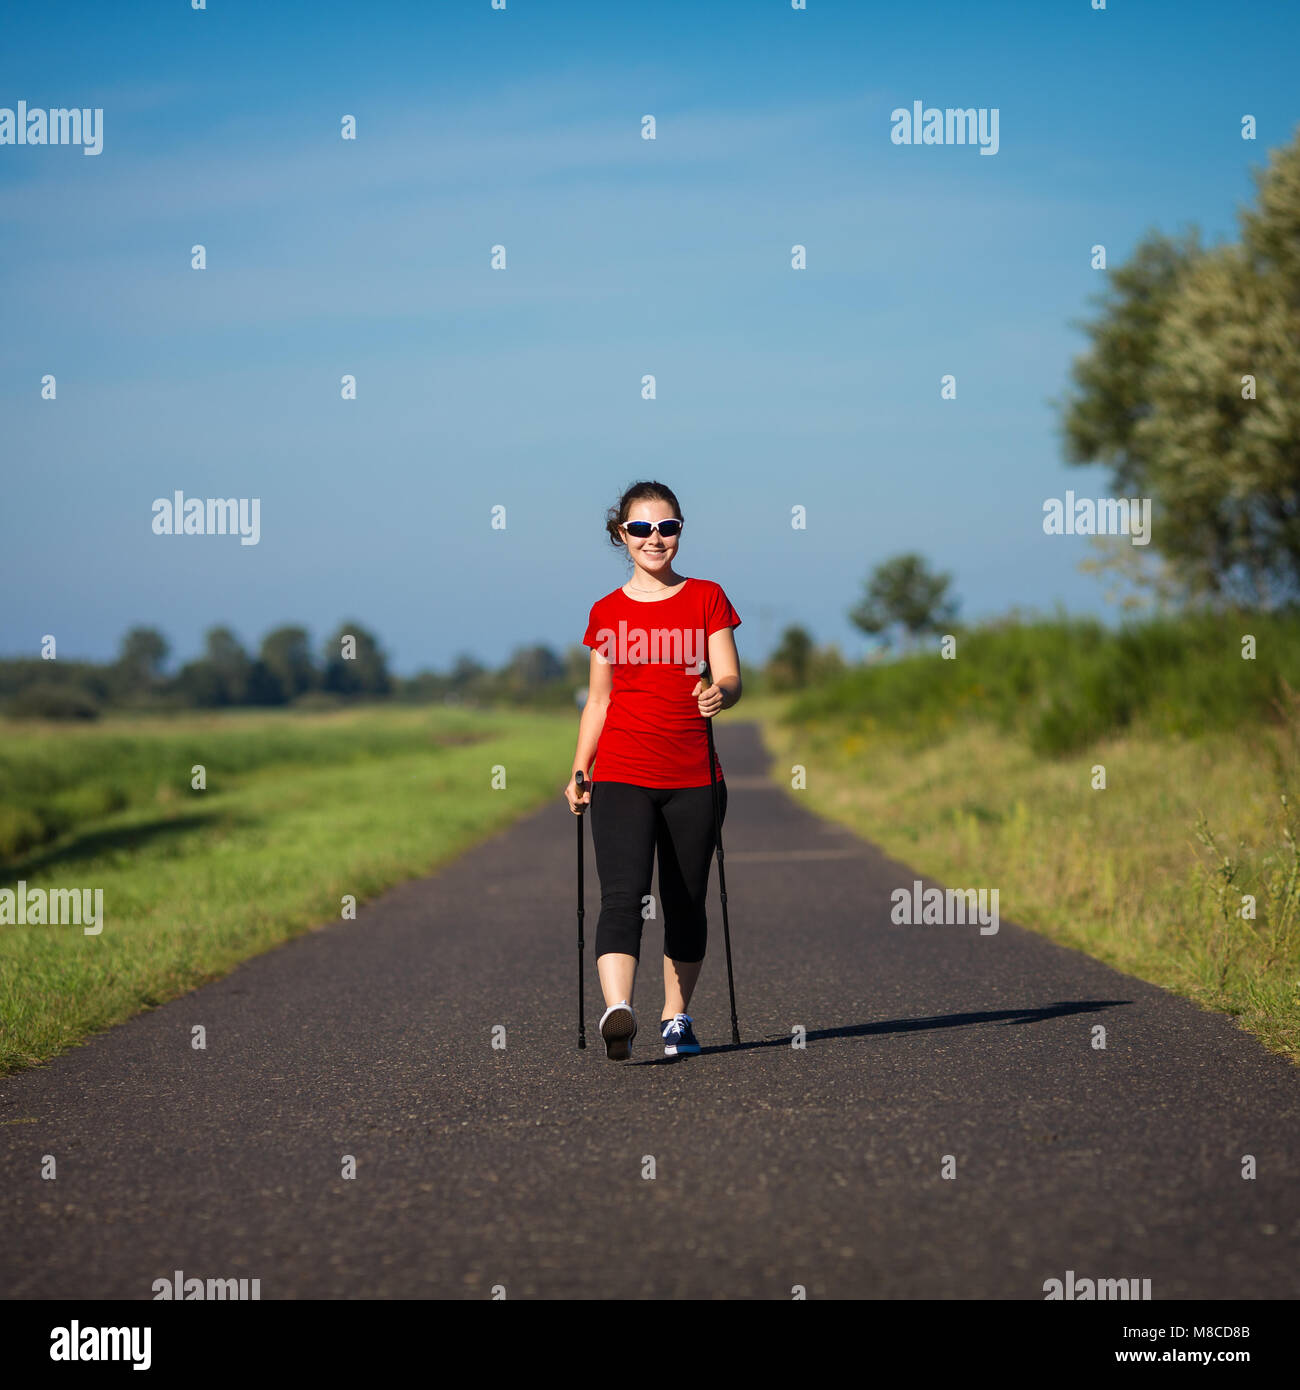 Nordic walking - young woman training Stock Photo